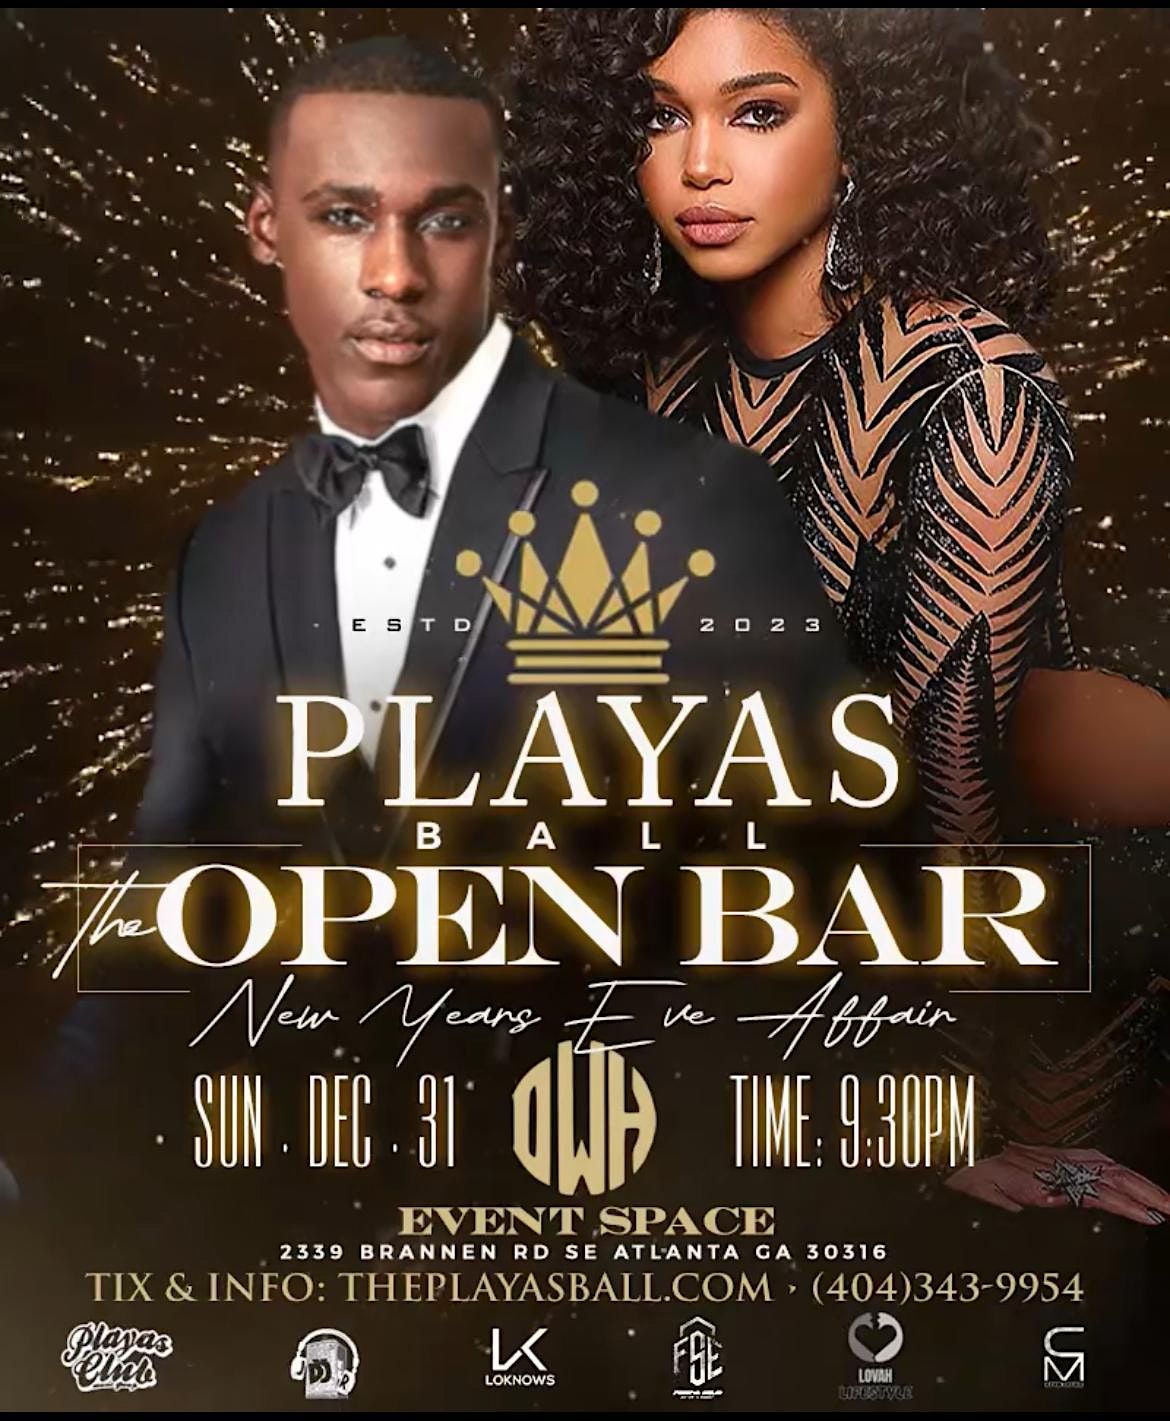 Playas Ball Open Bar New Years Eve Affair